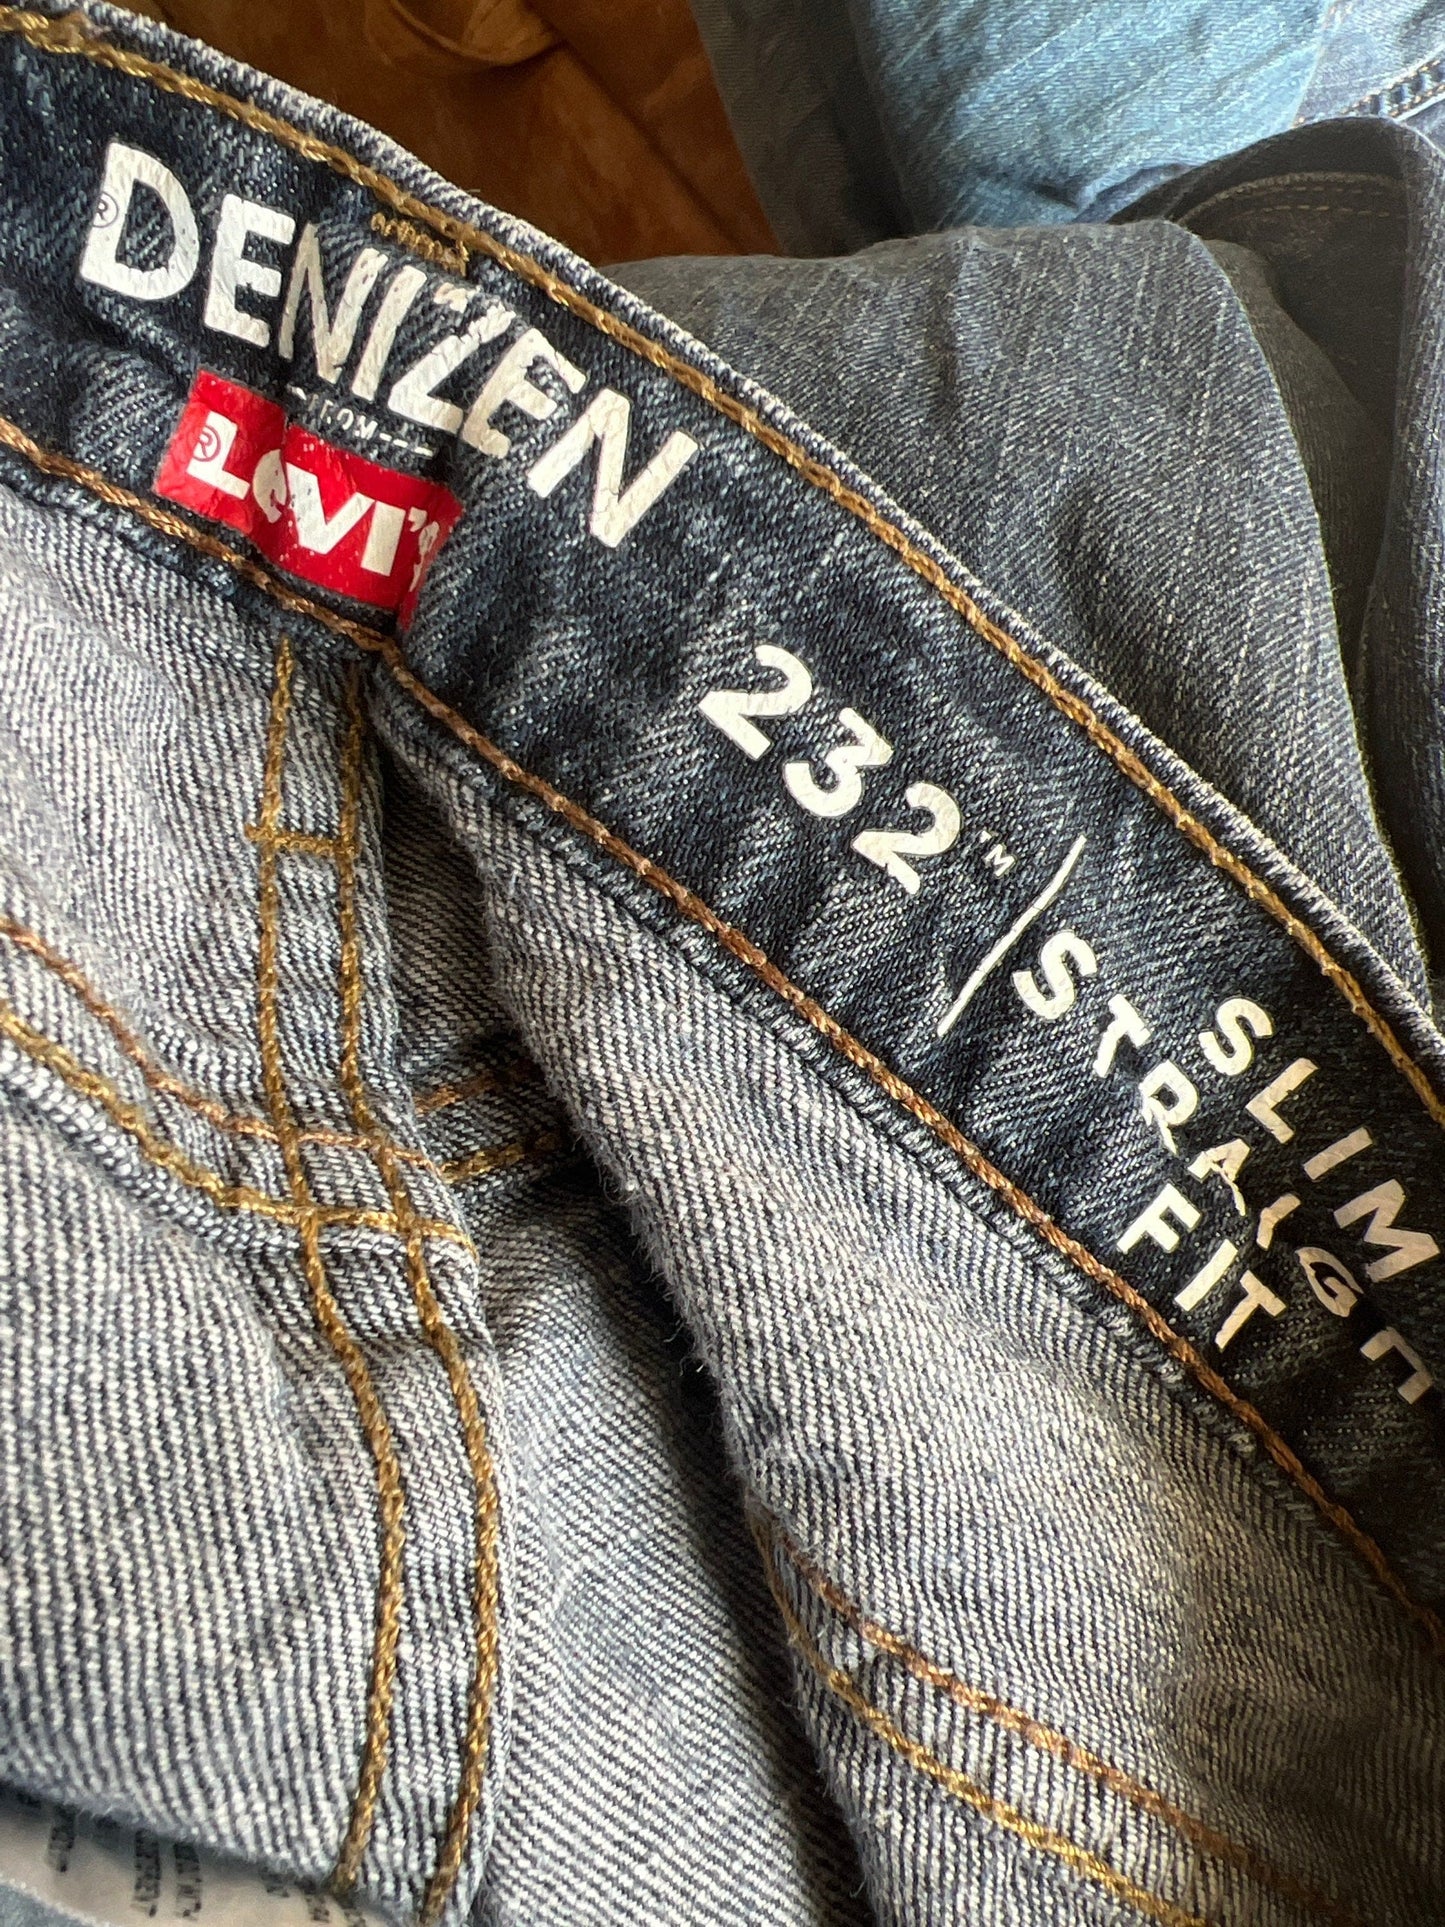 Levi Jeans slim straight Fit - blue denim jeans  - Denizen Levi Jeans 232 W30 L30